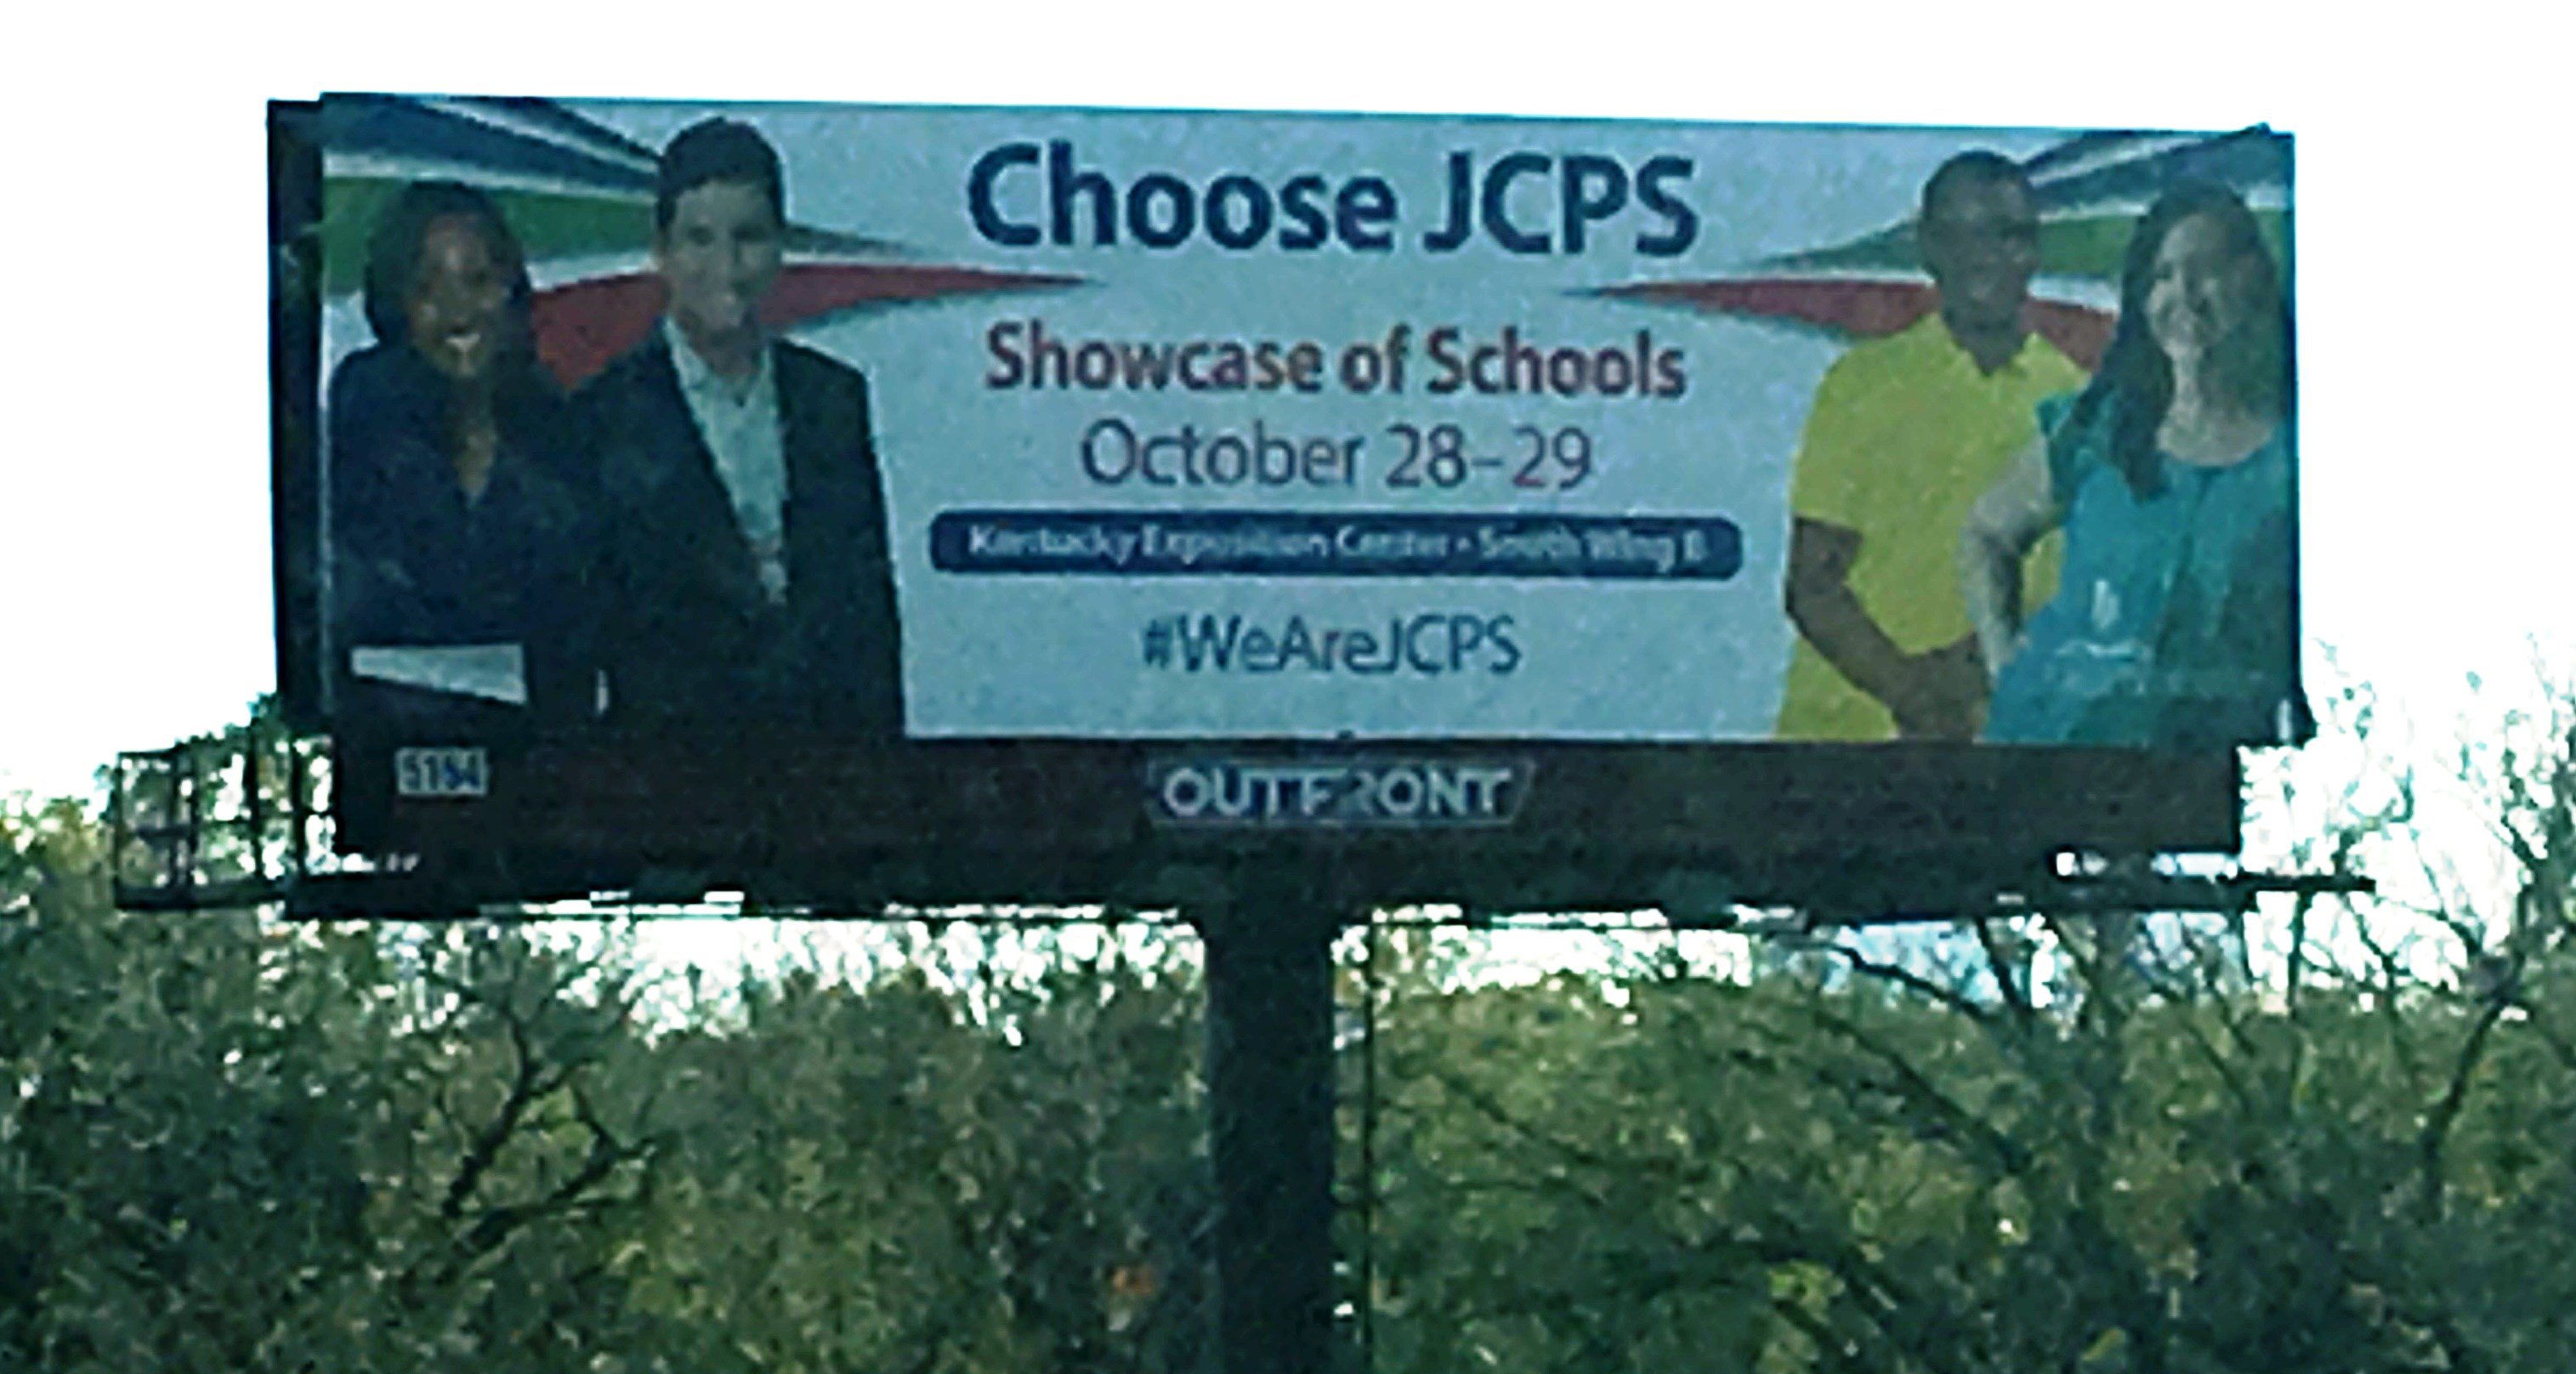 JCPS Showcase of Schools starts Friday, open houses begin in November